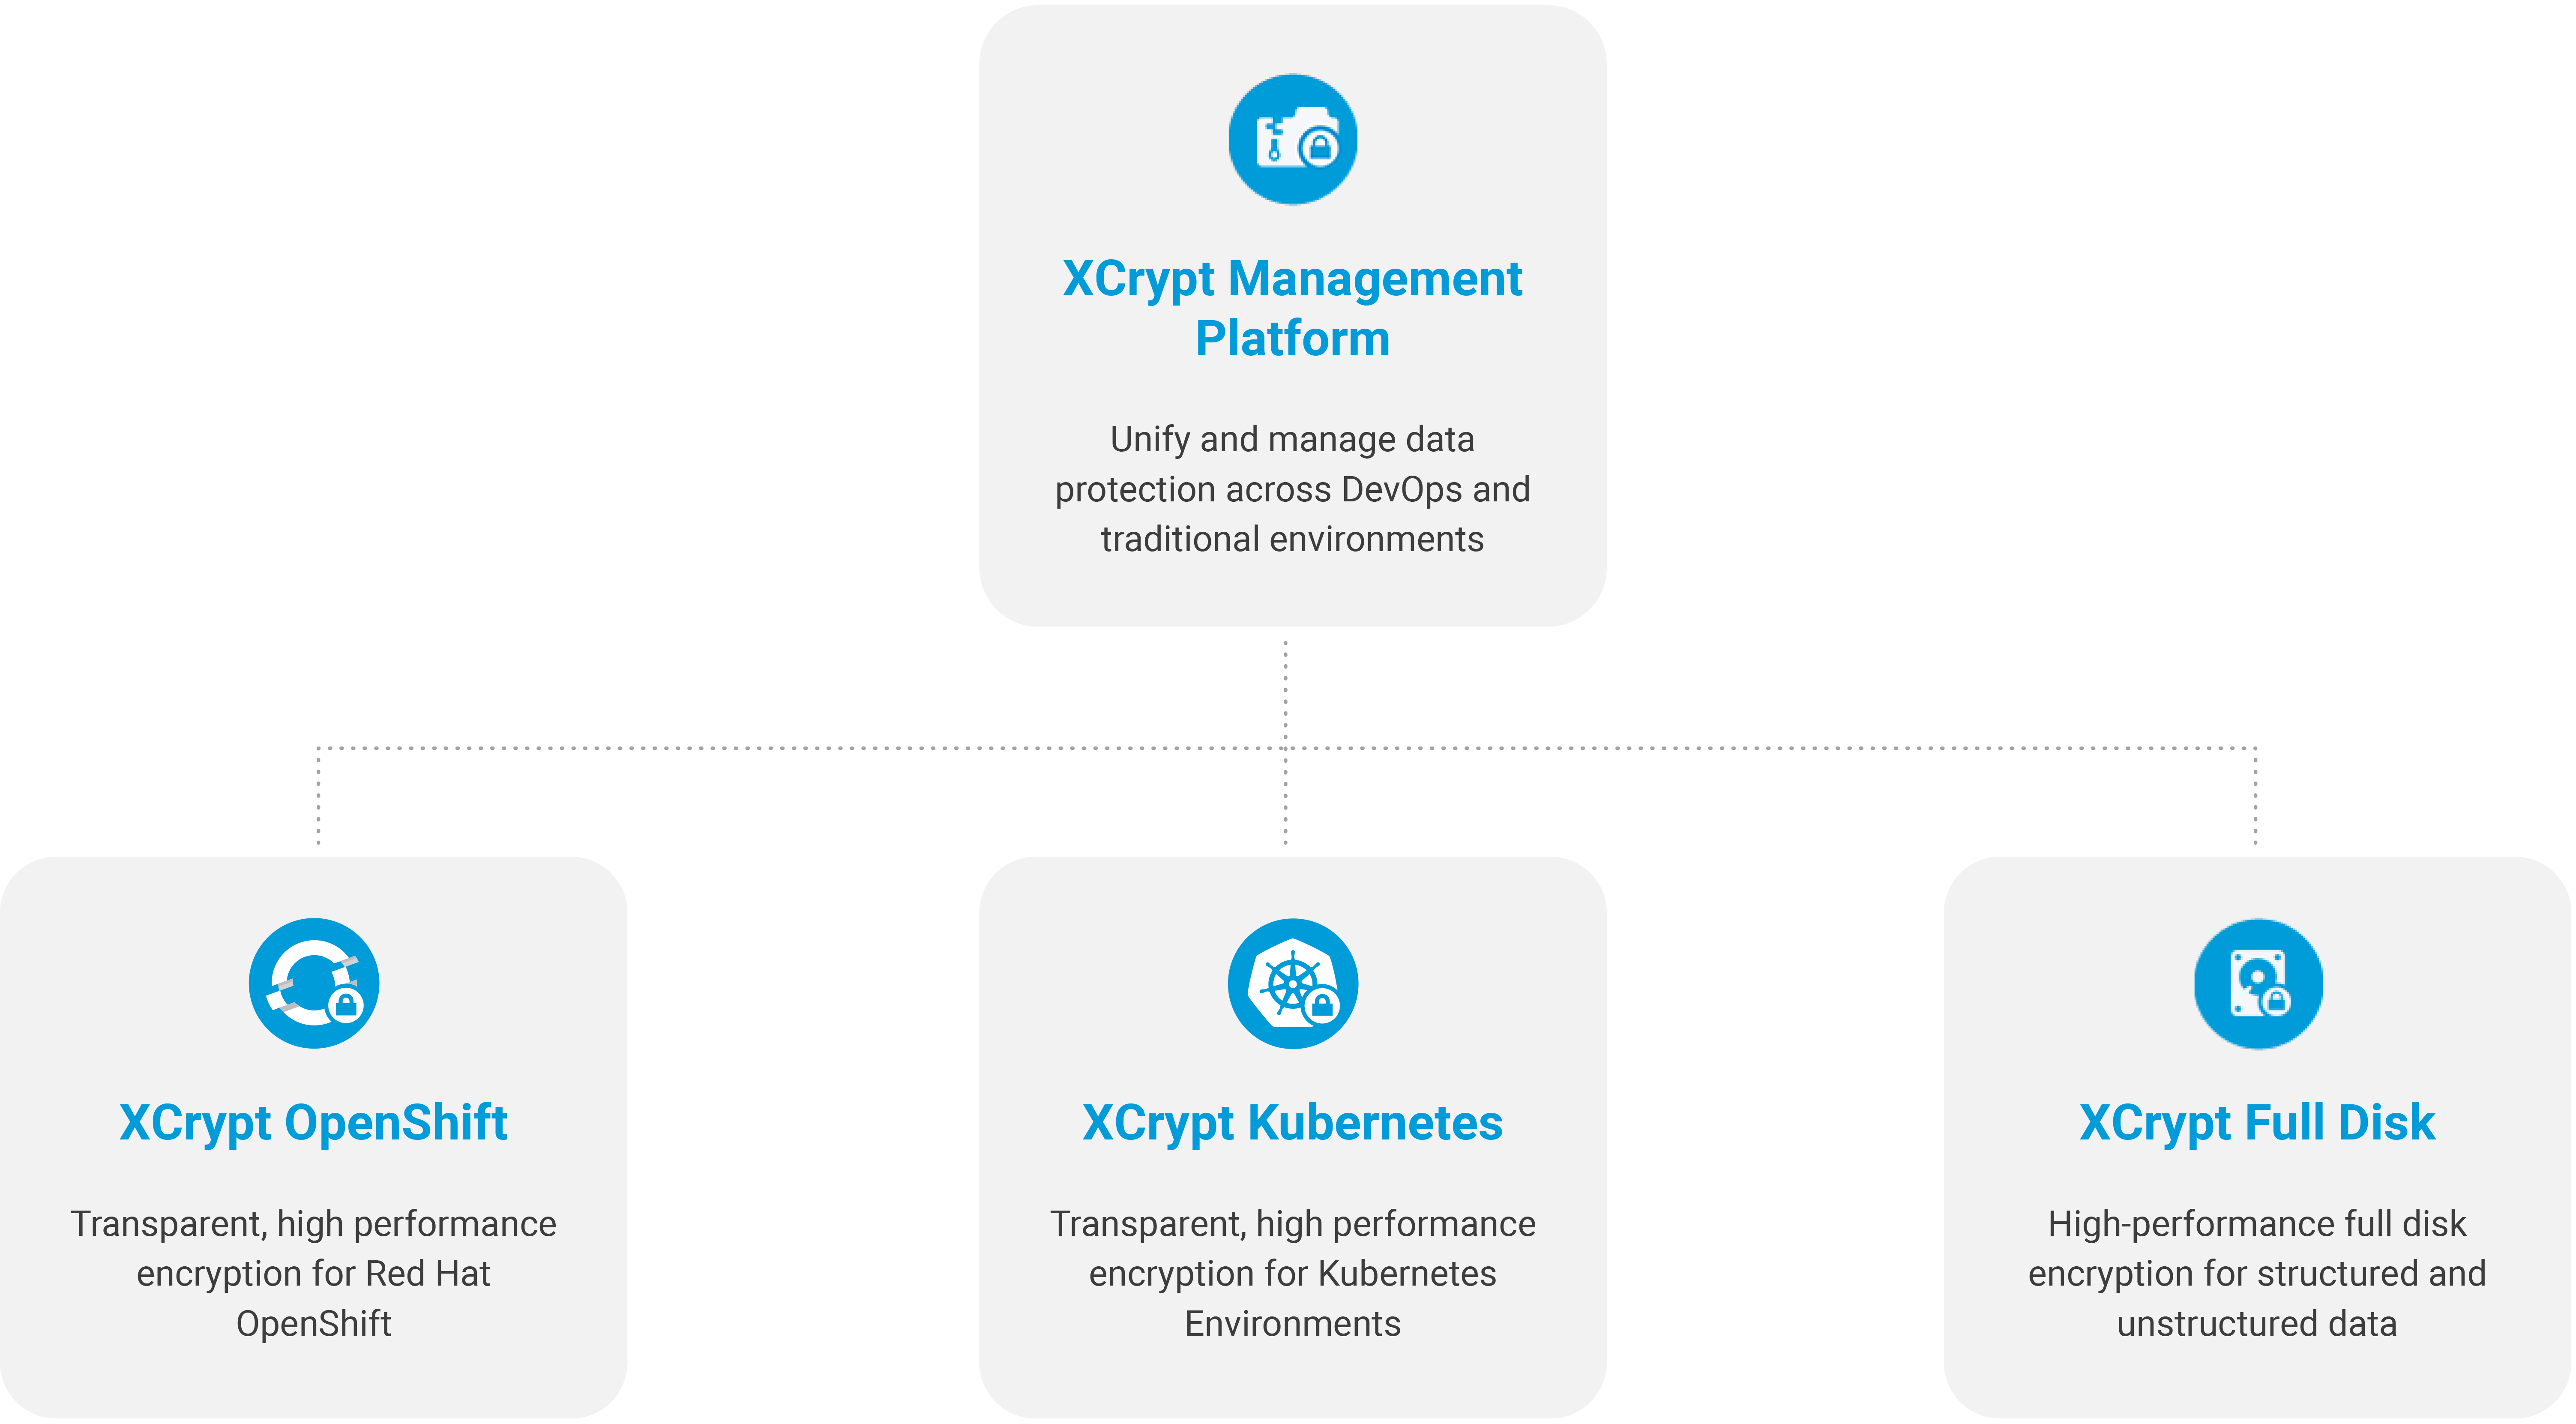 XCrypt Management Platform